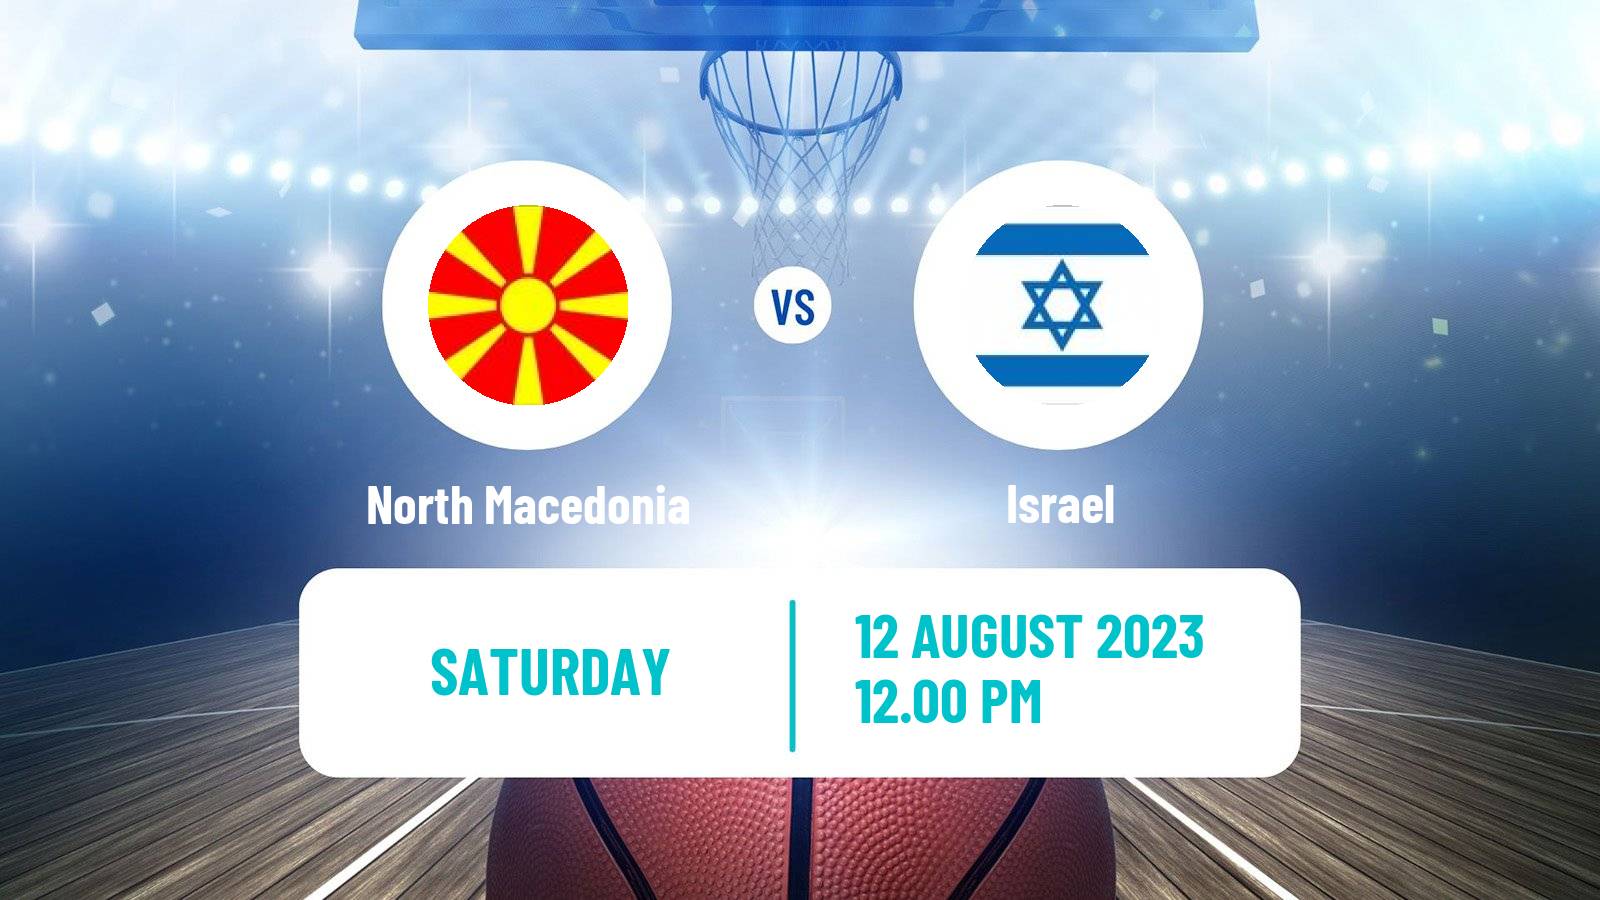 Basketball Olympic Games - Basketball North Macedonia - Israel